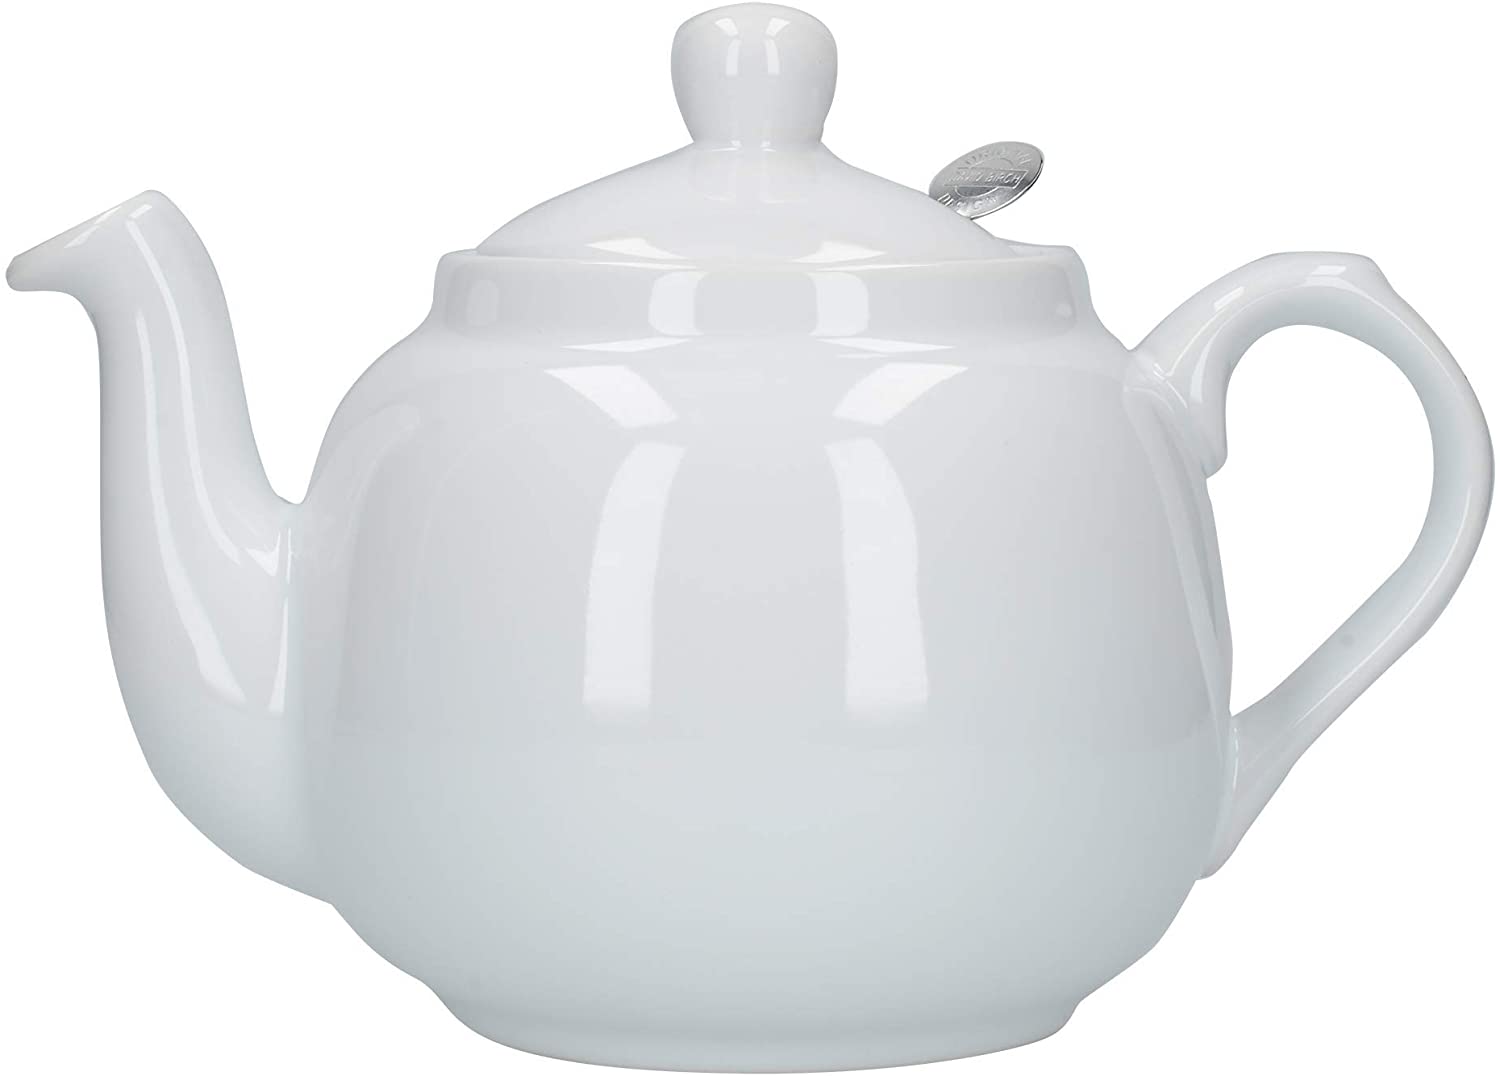 Dexam London Pottery 4 Cup Filter Teapot White